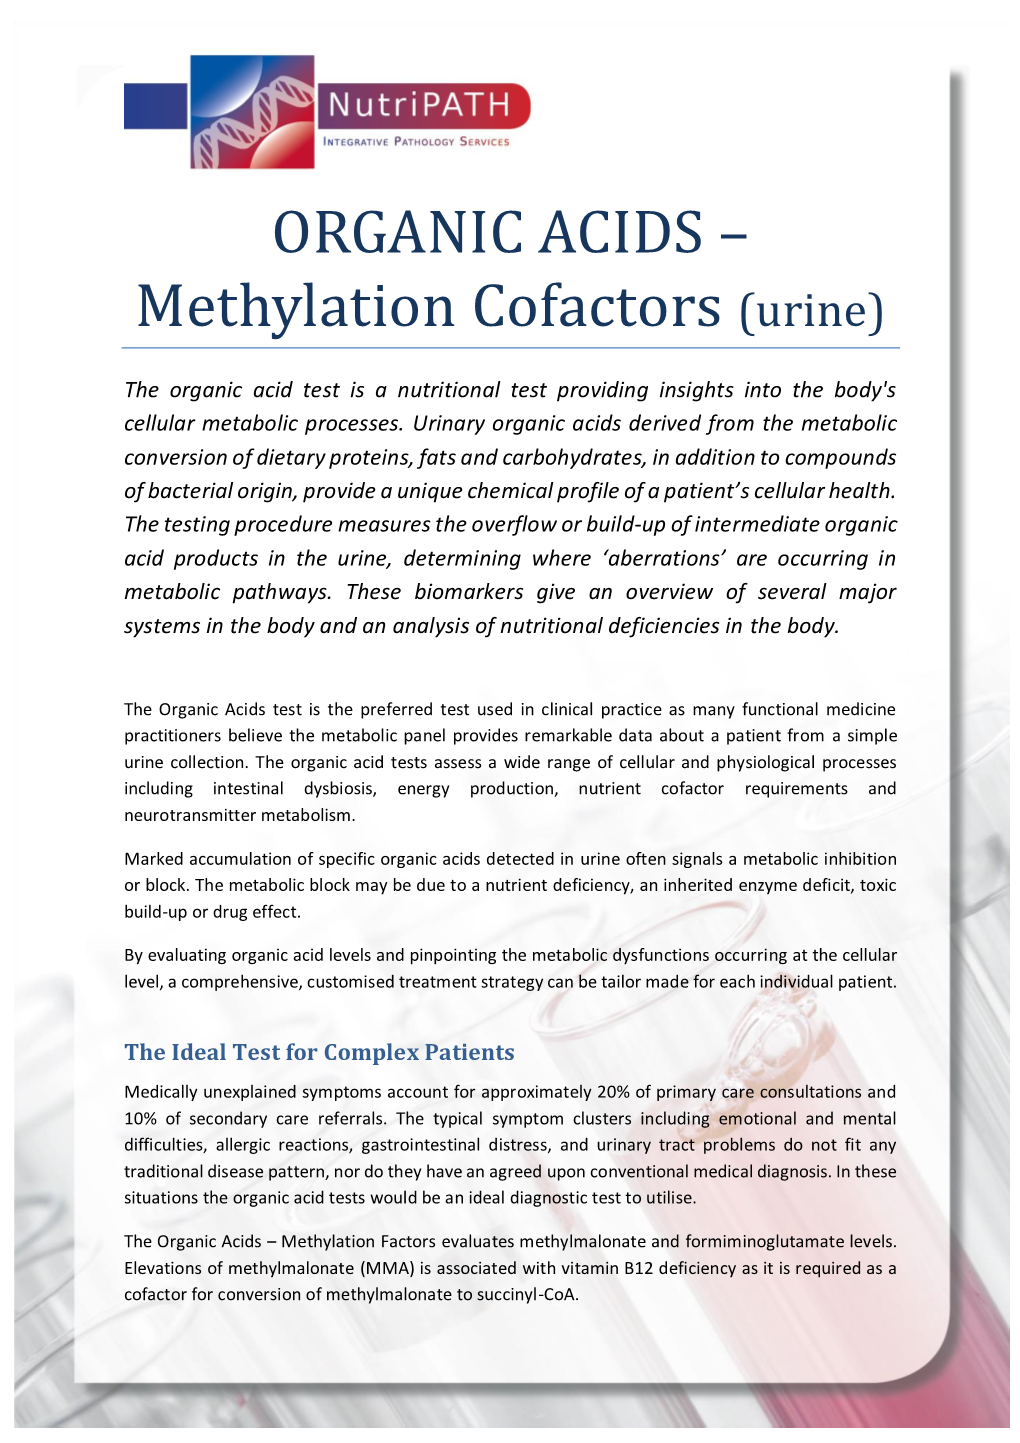 ORGANIC ACIDS – Methylation Cofactors (Urine)